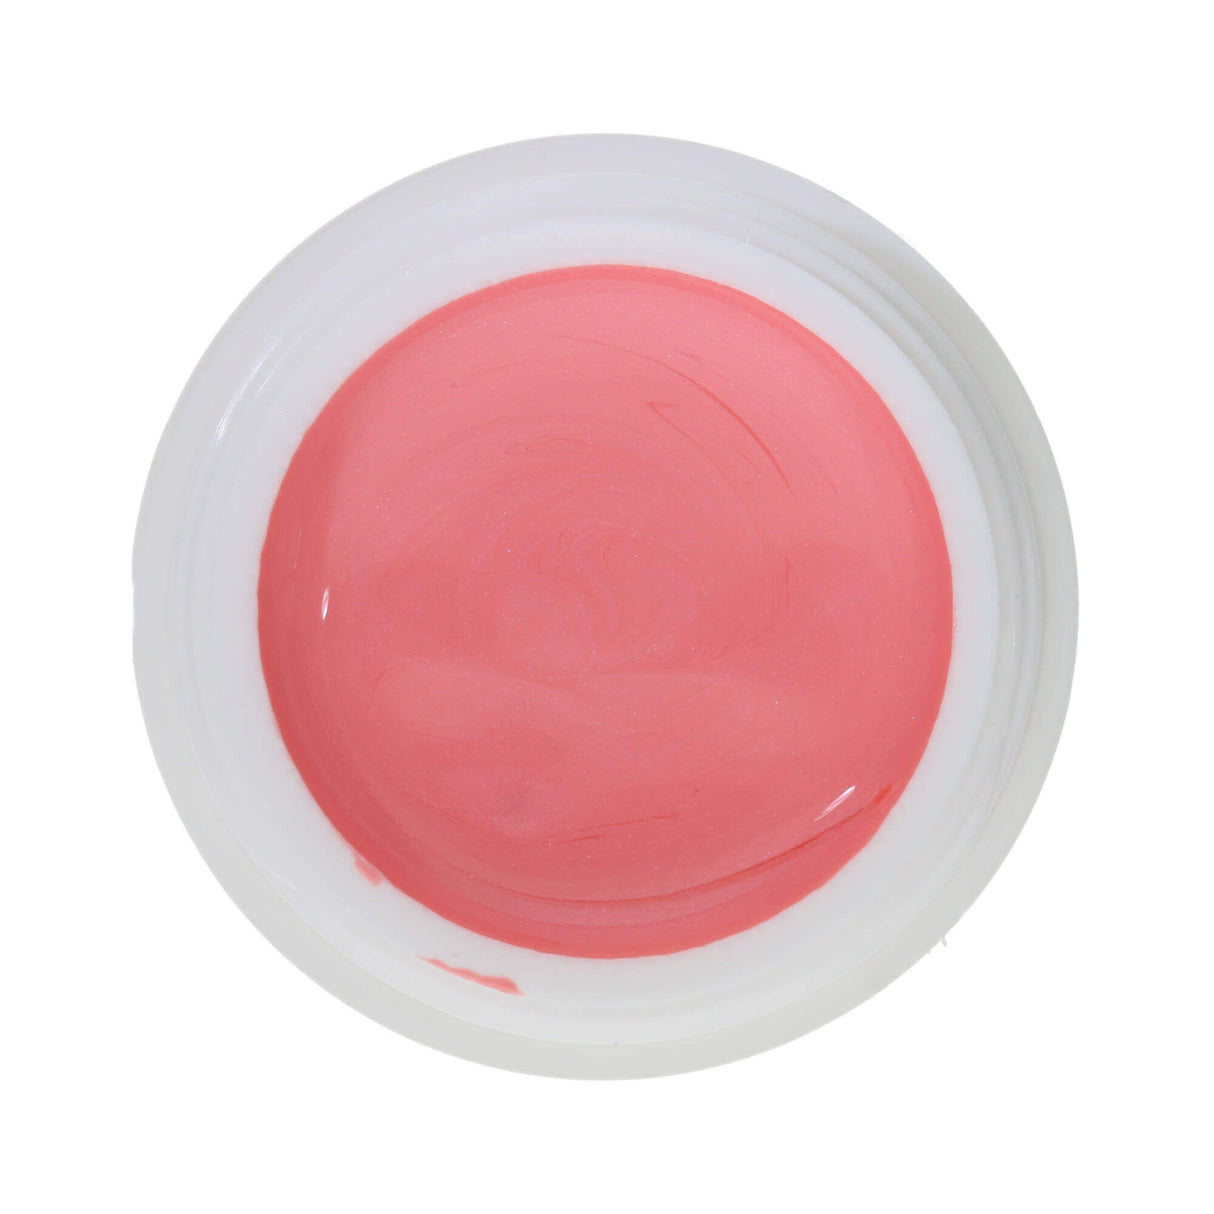 #335 Premium-EFFEKT Color Gel 5ml Helles Rosa mit sehr dezentem Perleffekt